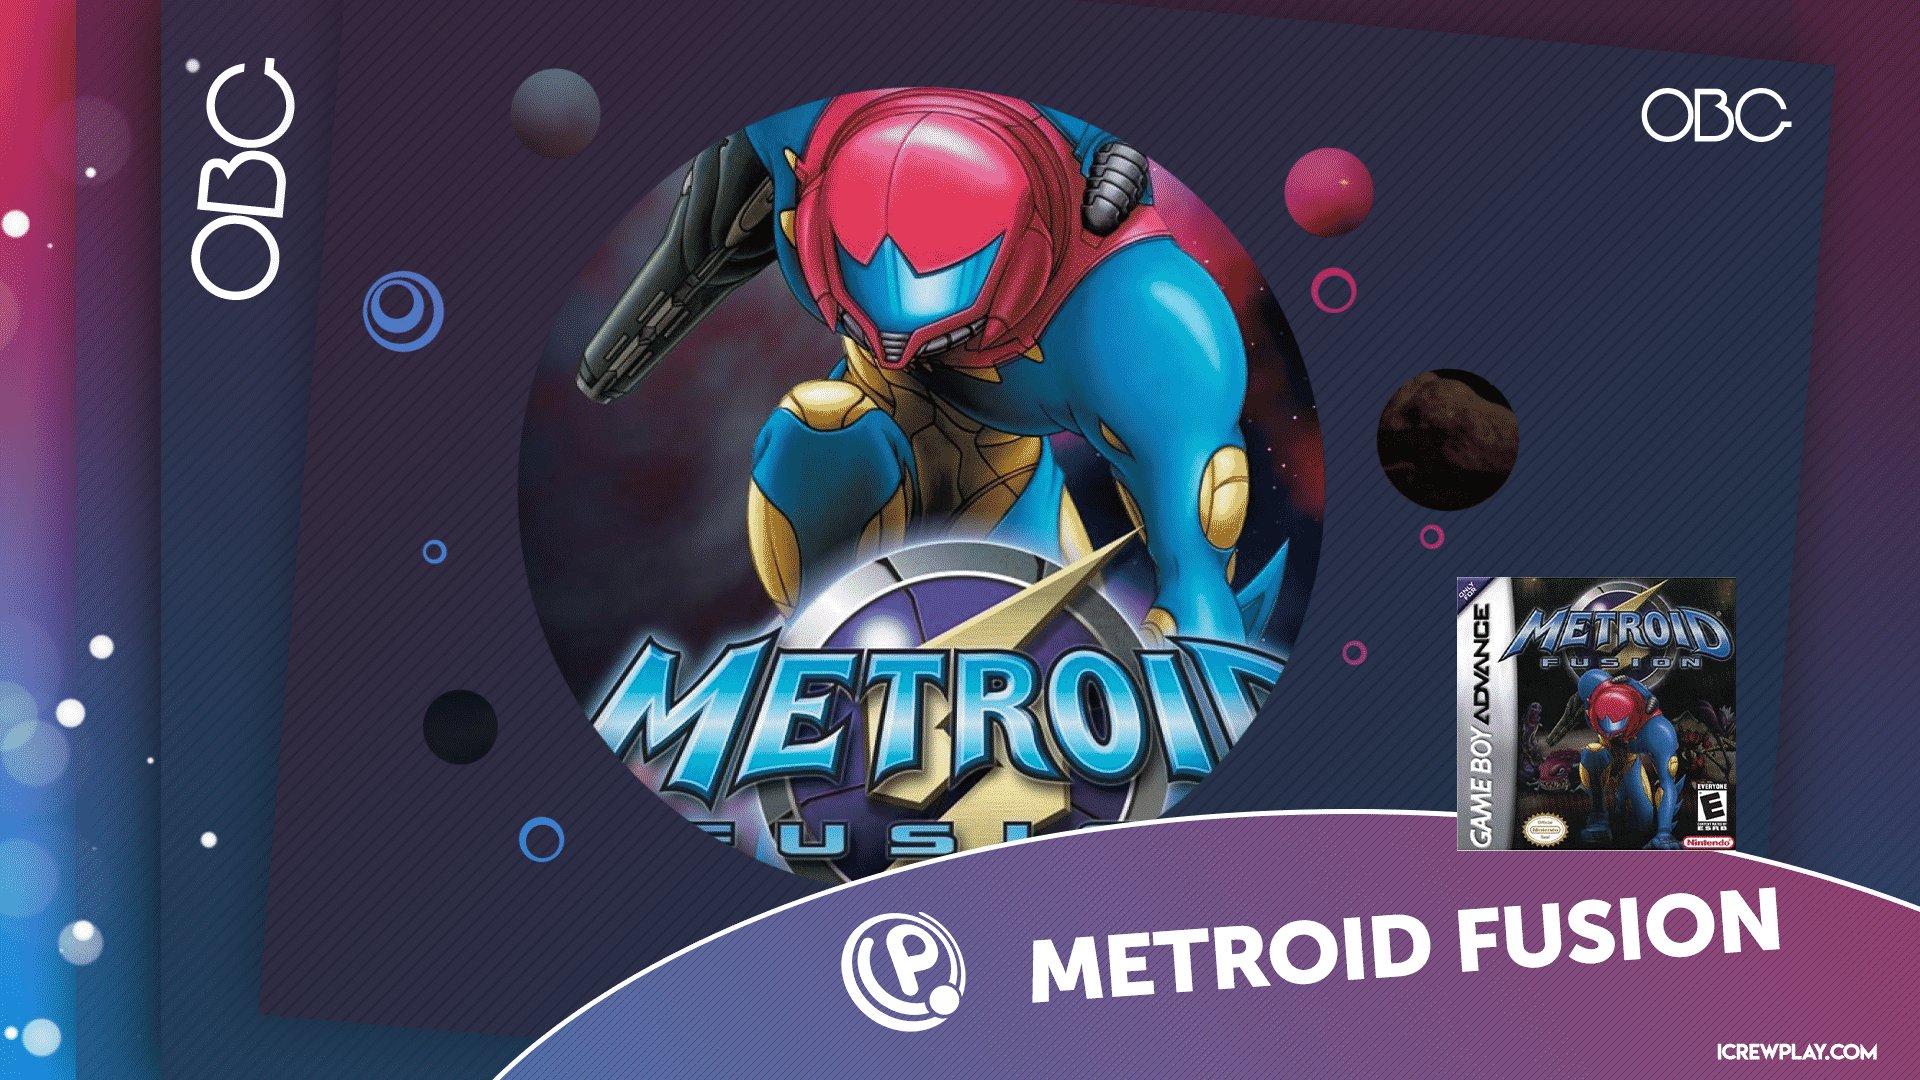 Metroid Fusion copertina OBG